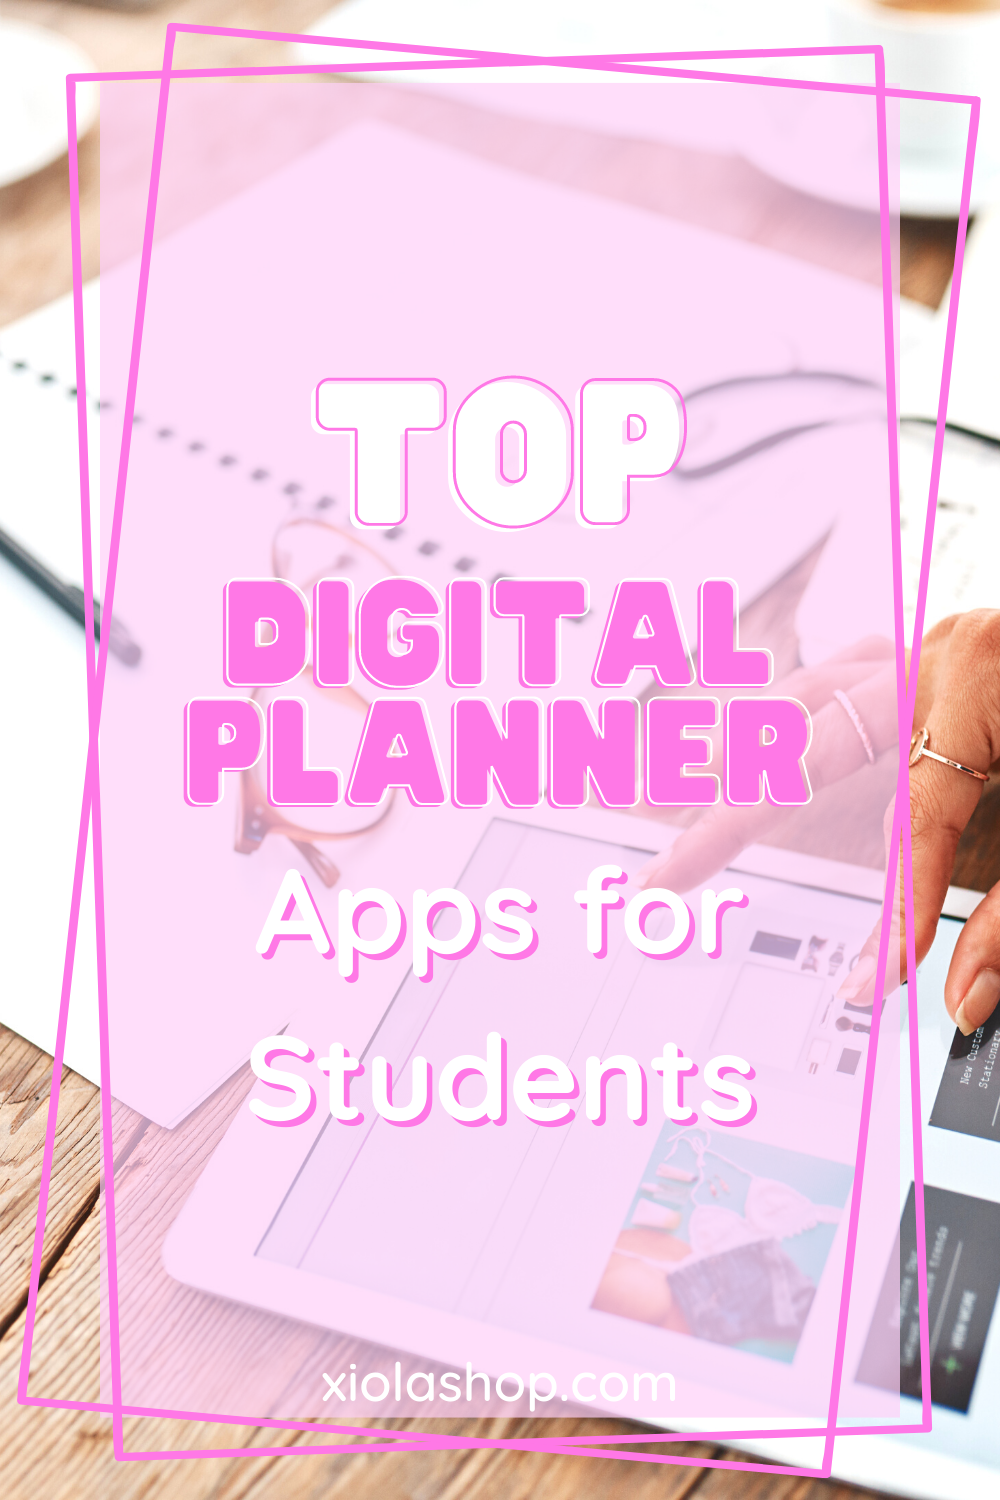 top-digital-planner-apps-for-students-xiola-shop